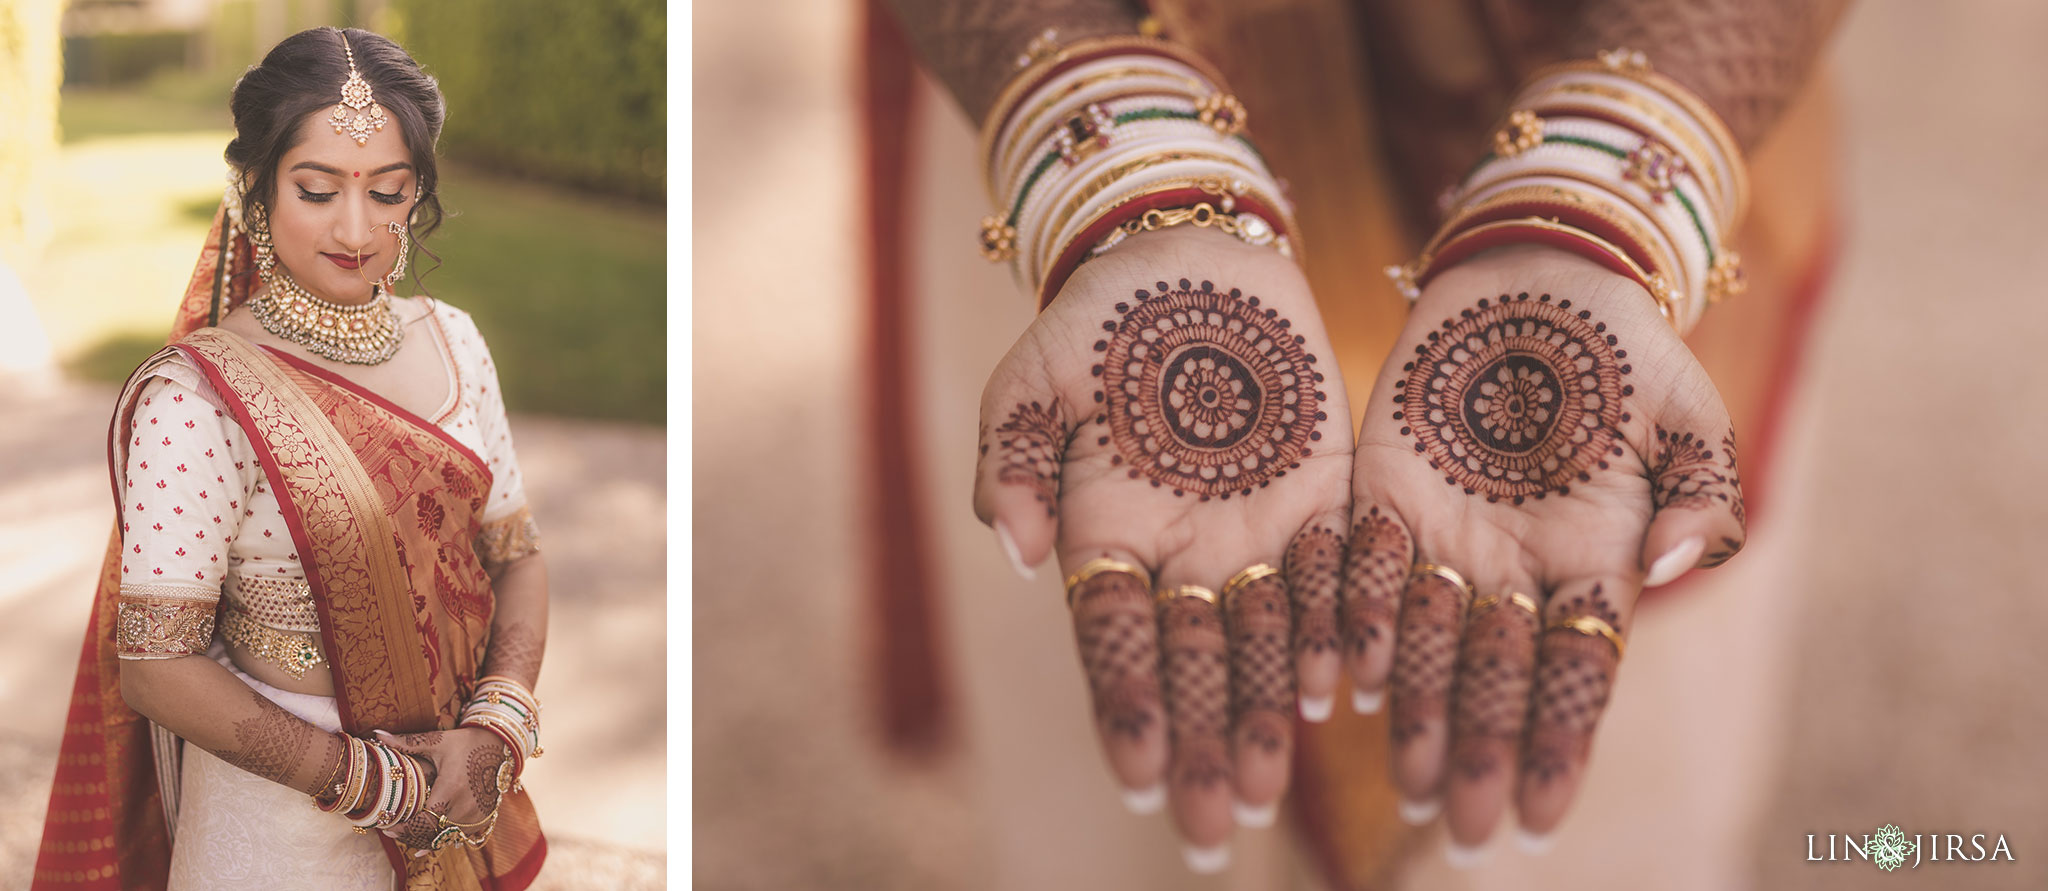 09 hotel irvine indian bride wedding photography